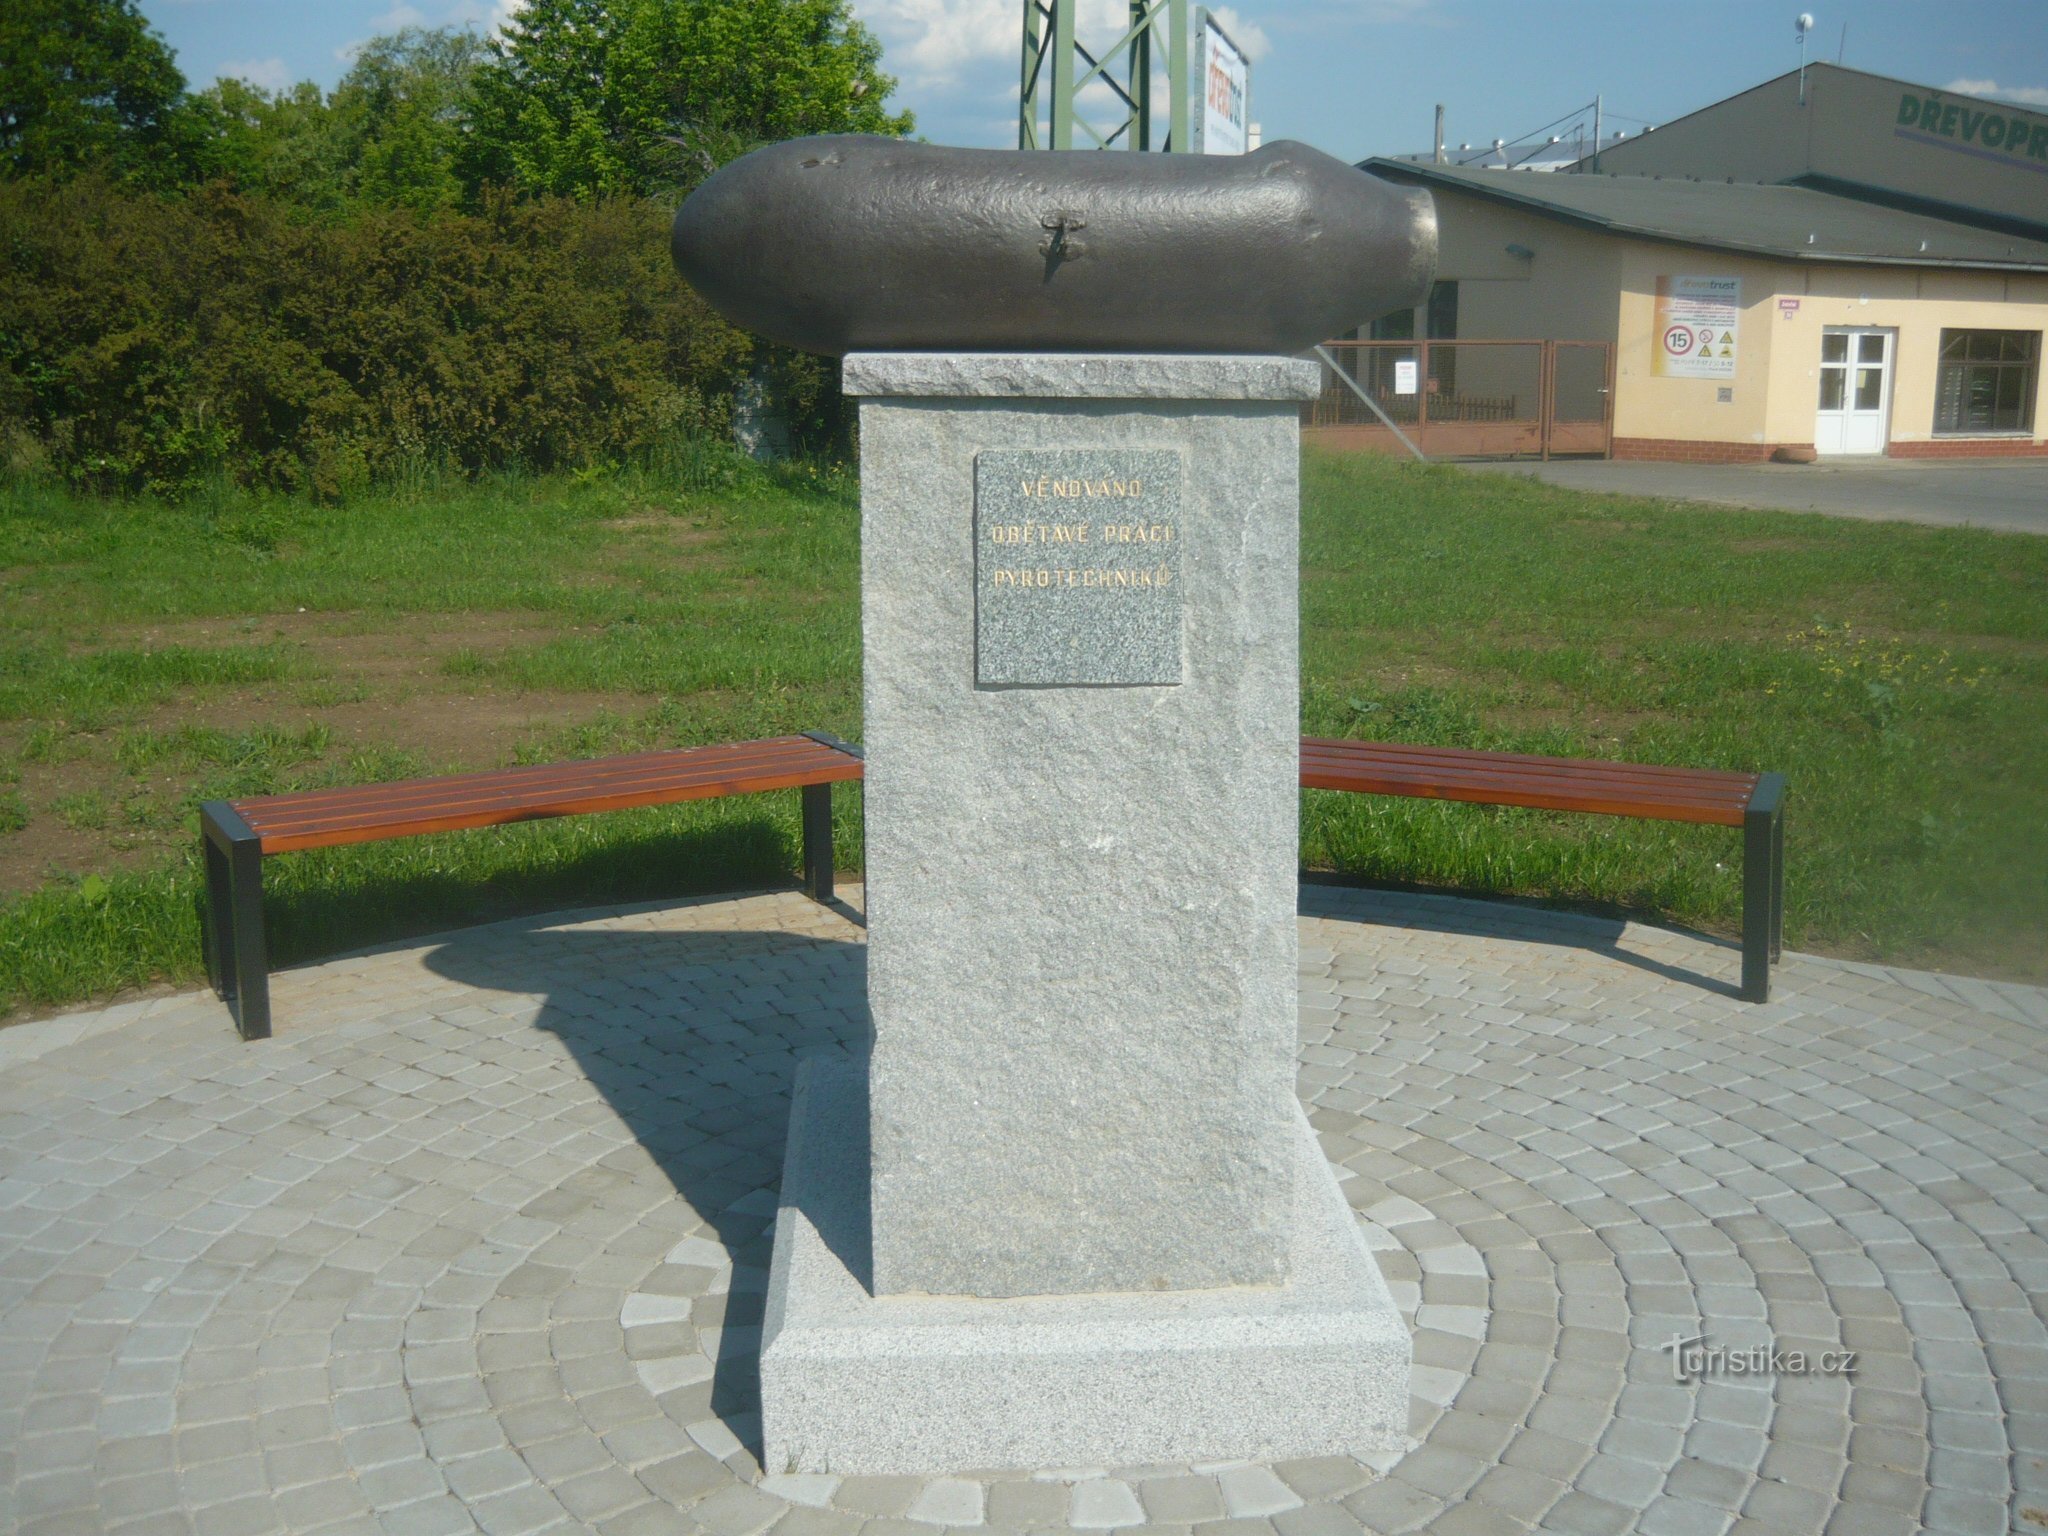 Spomenik bombardiranju Plzena 17.4. 1945. godine